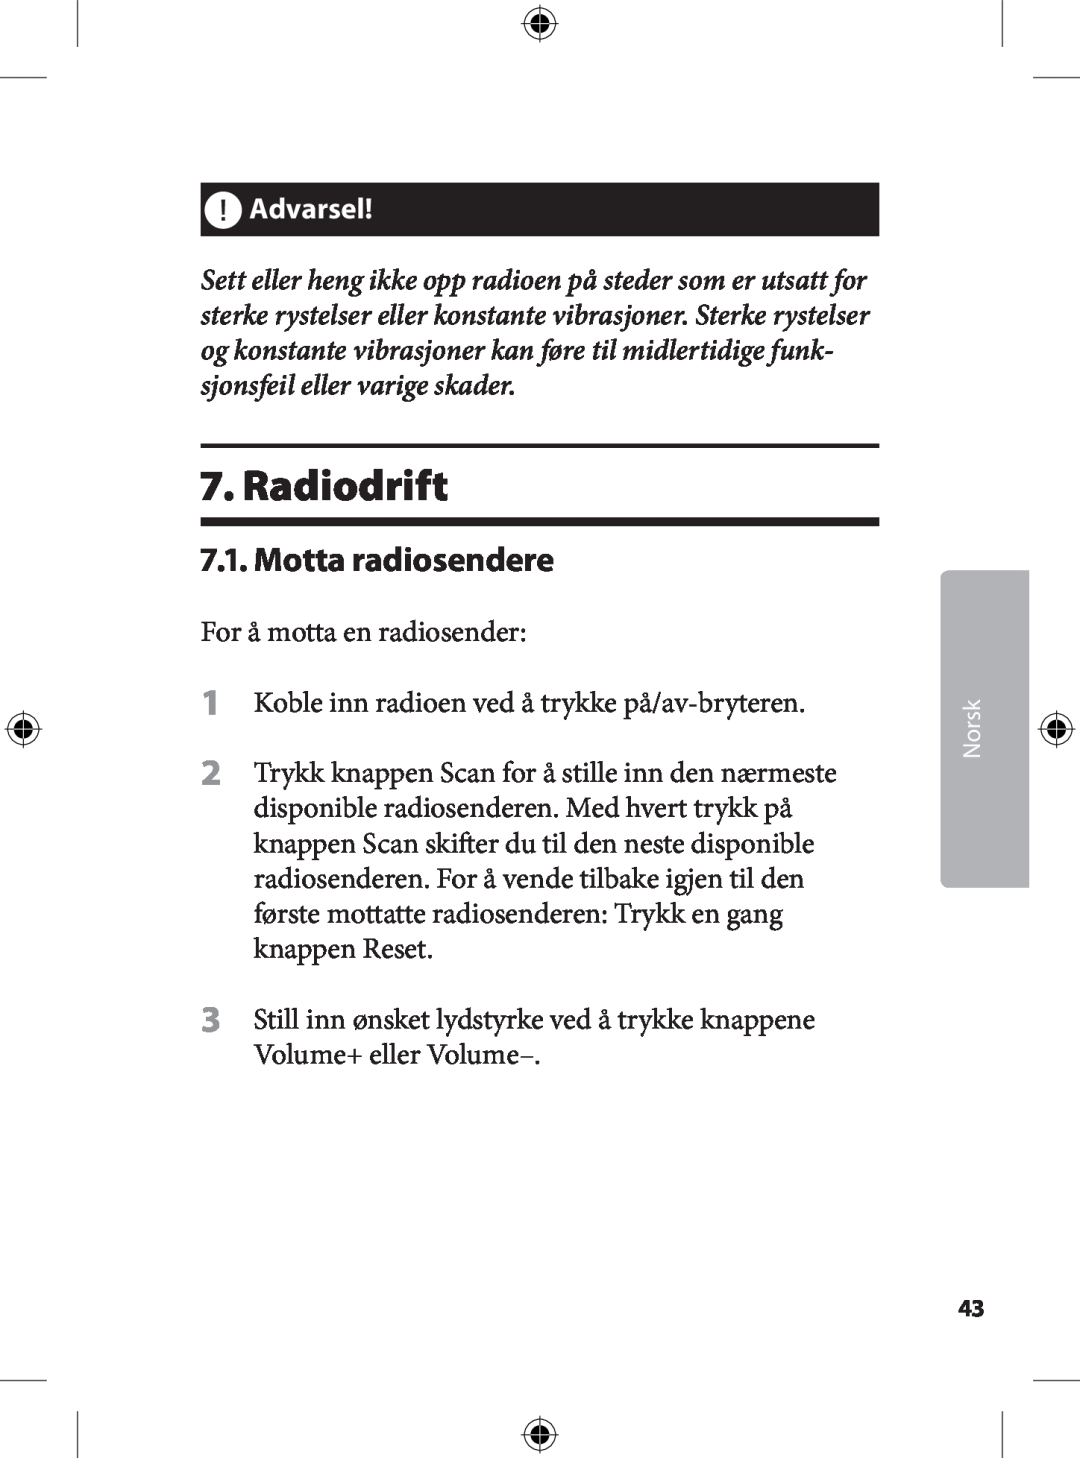 Kompernass KH 2246 manual . Radiodrift, .. Motta radiosendere, Advarsel 